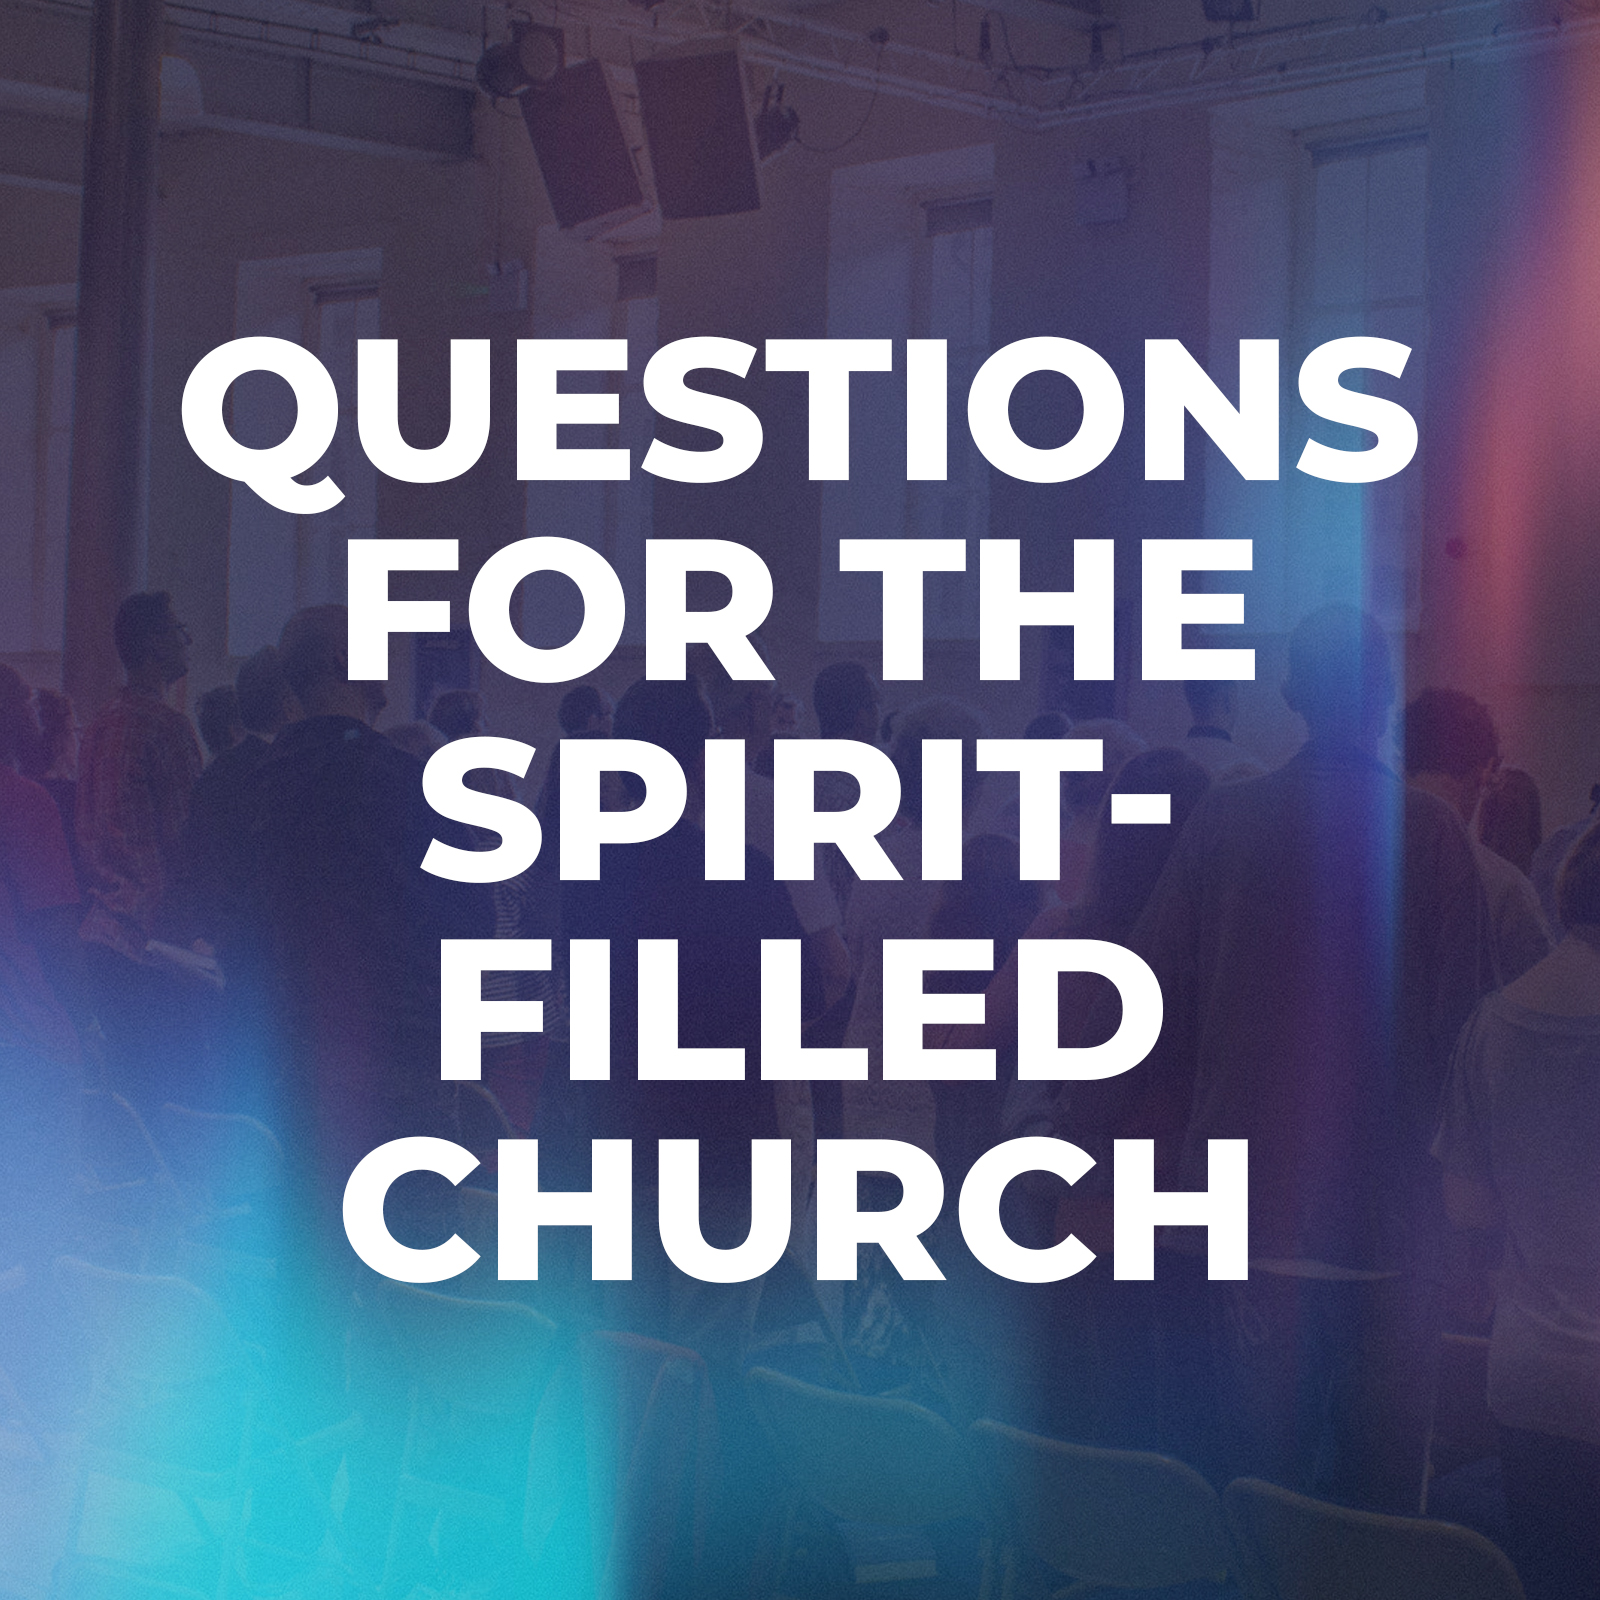 Questions for the spirit filled church - Hope Church Huddersfield Sermon Series